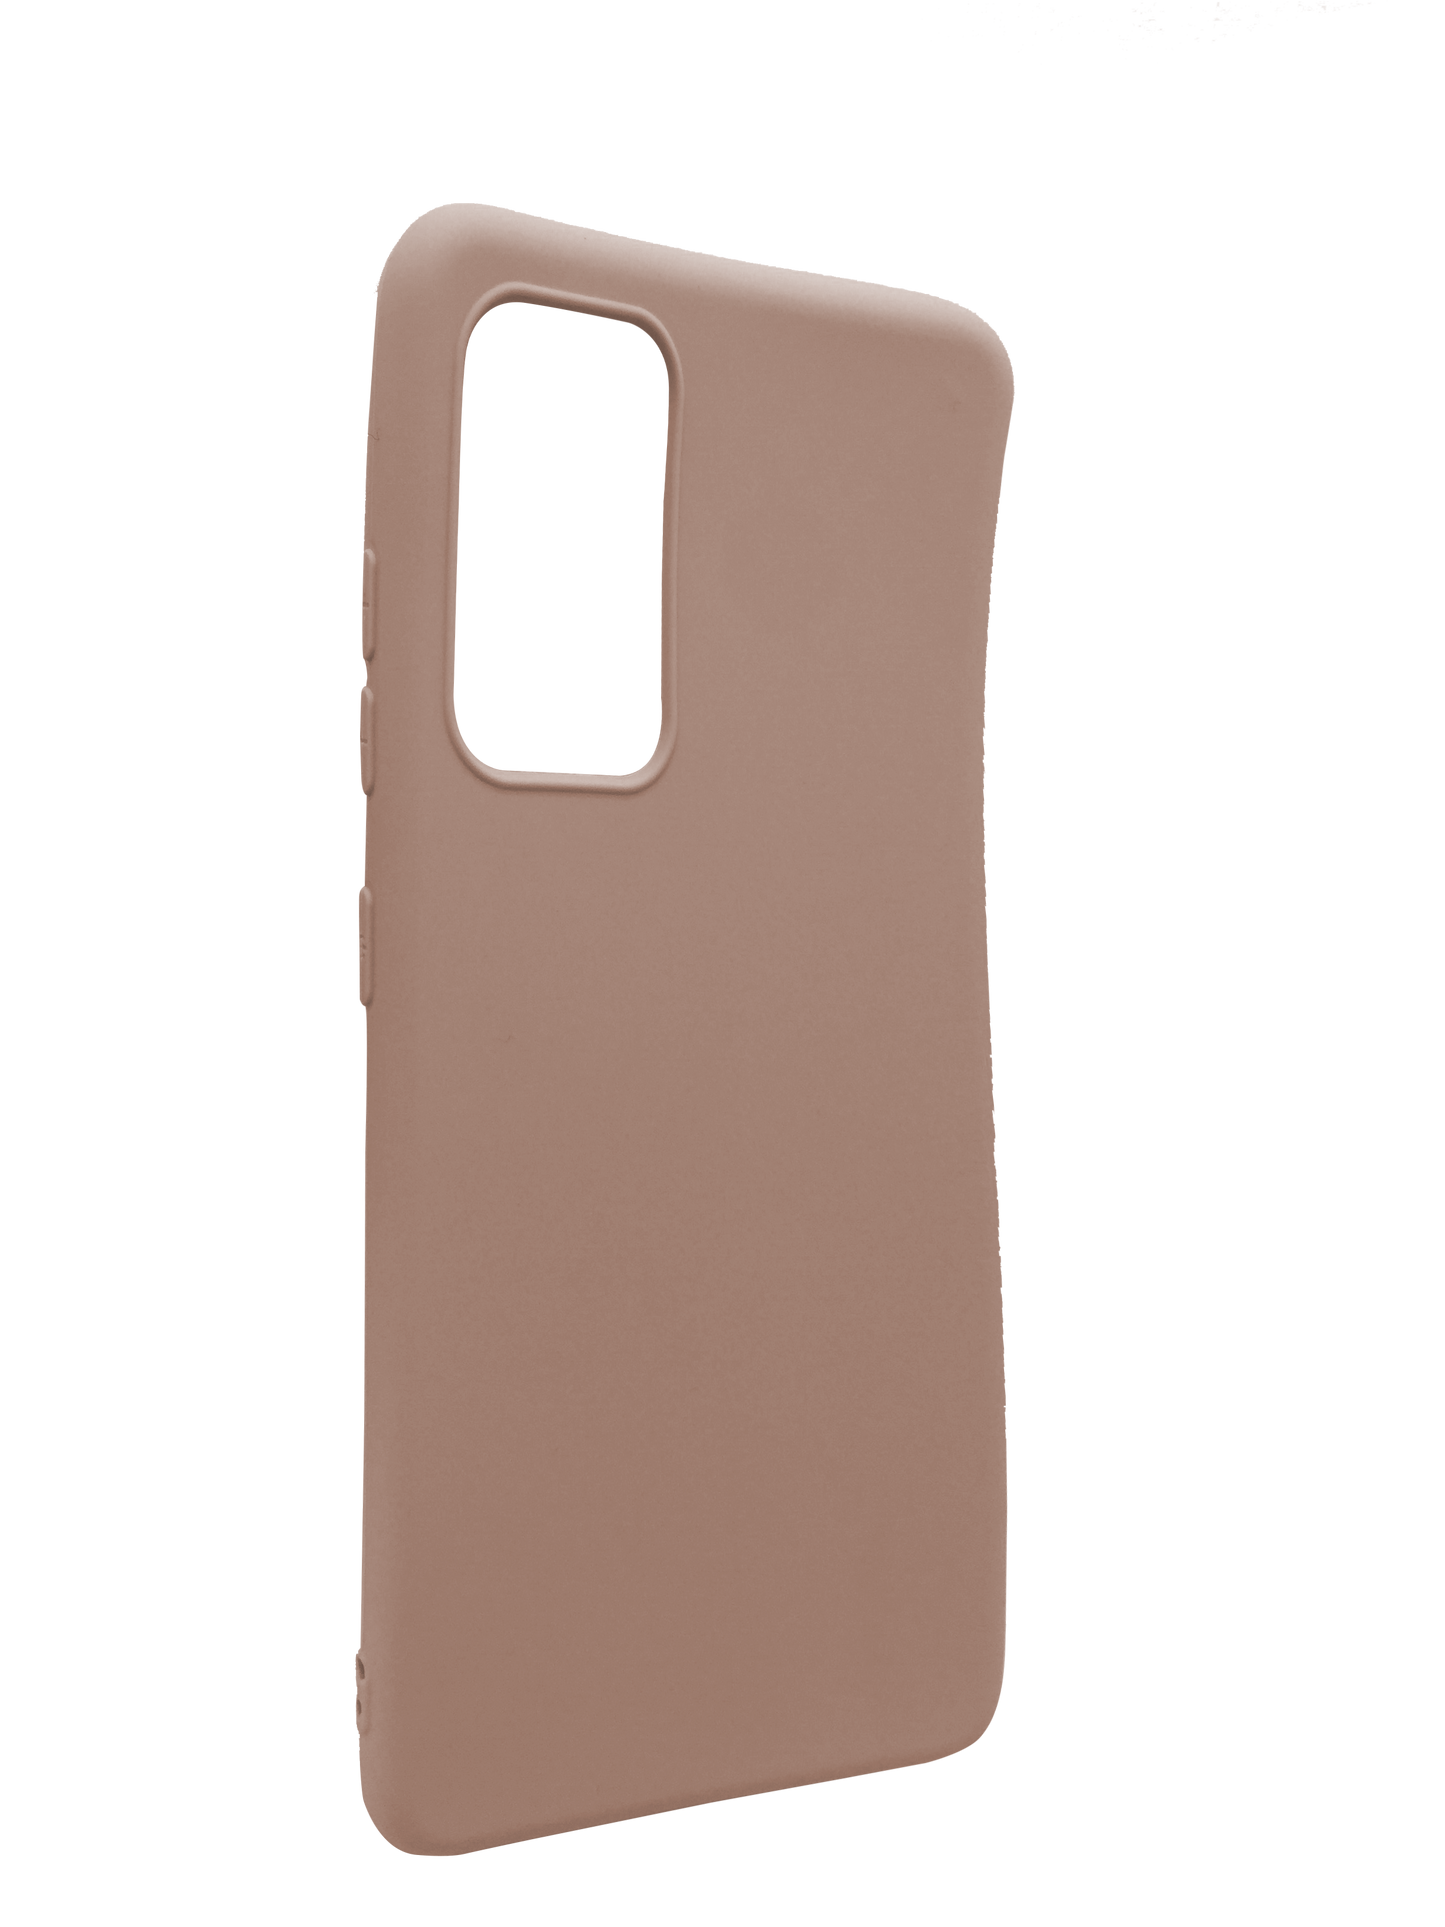 Silicone case Samsung A52 PINK